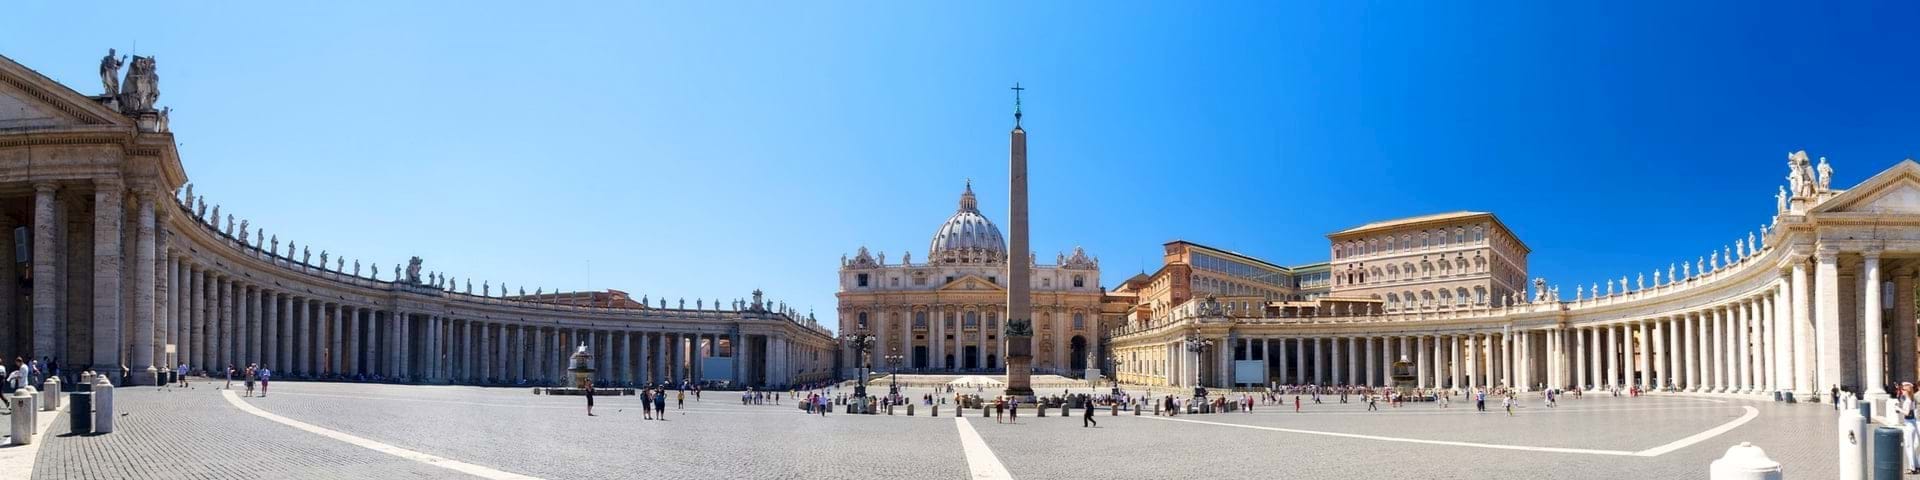 Vatican Museums Tours